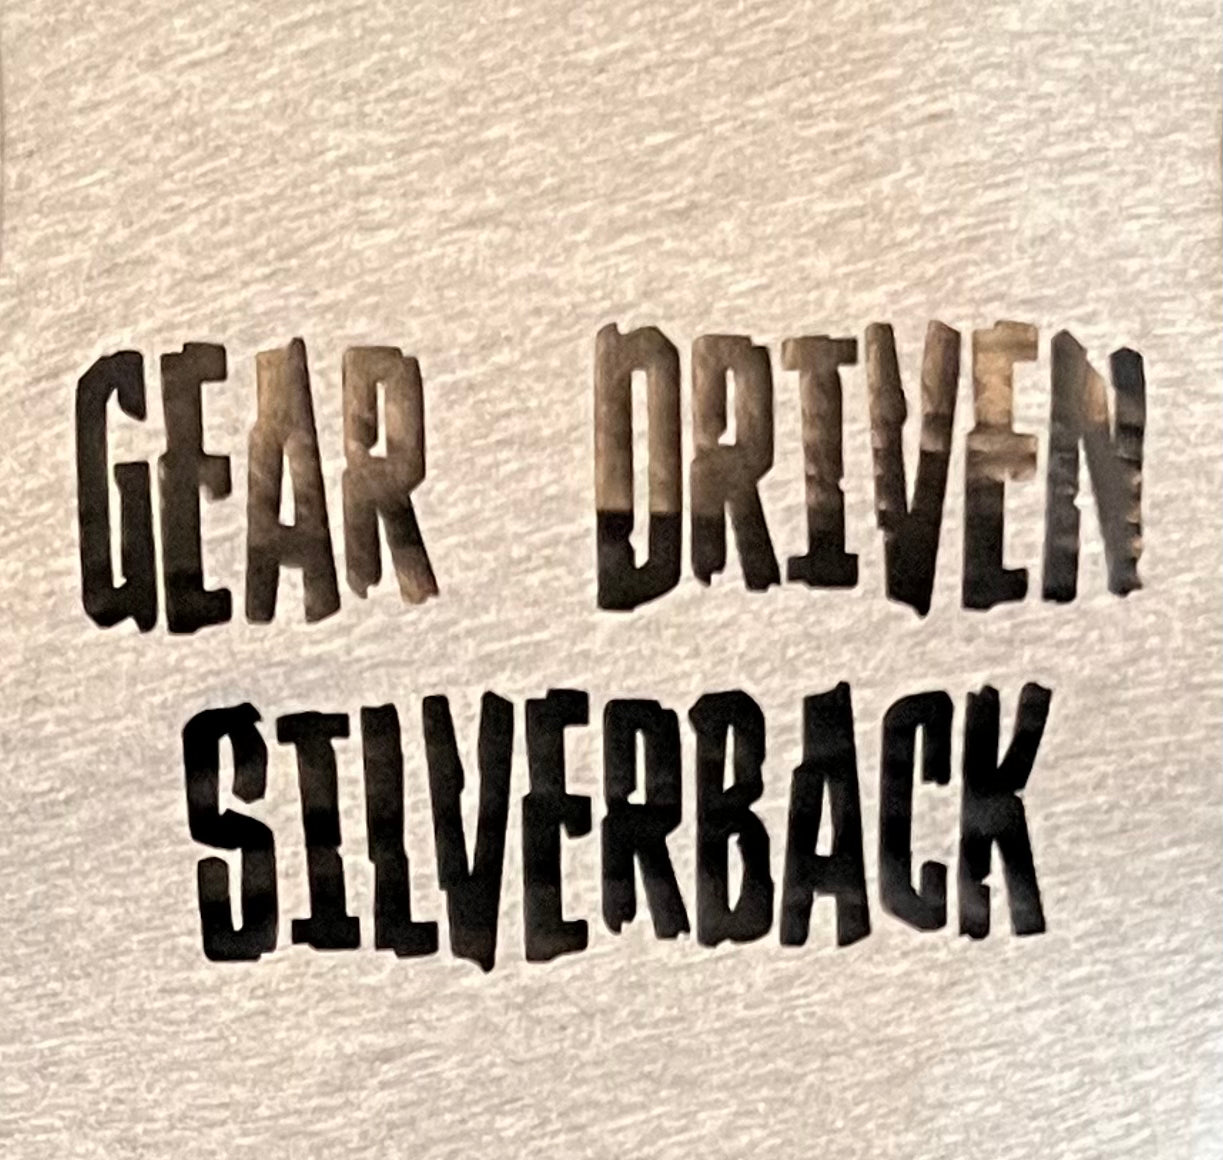 Gear Driven Silverback